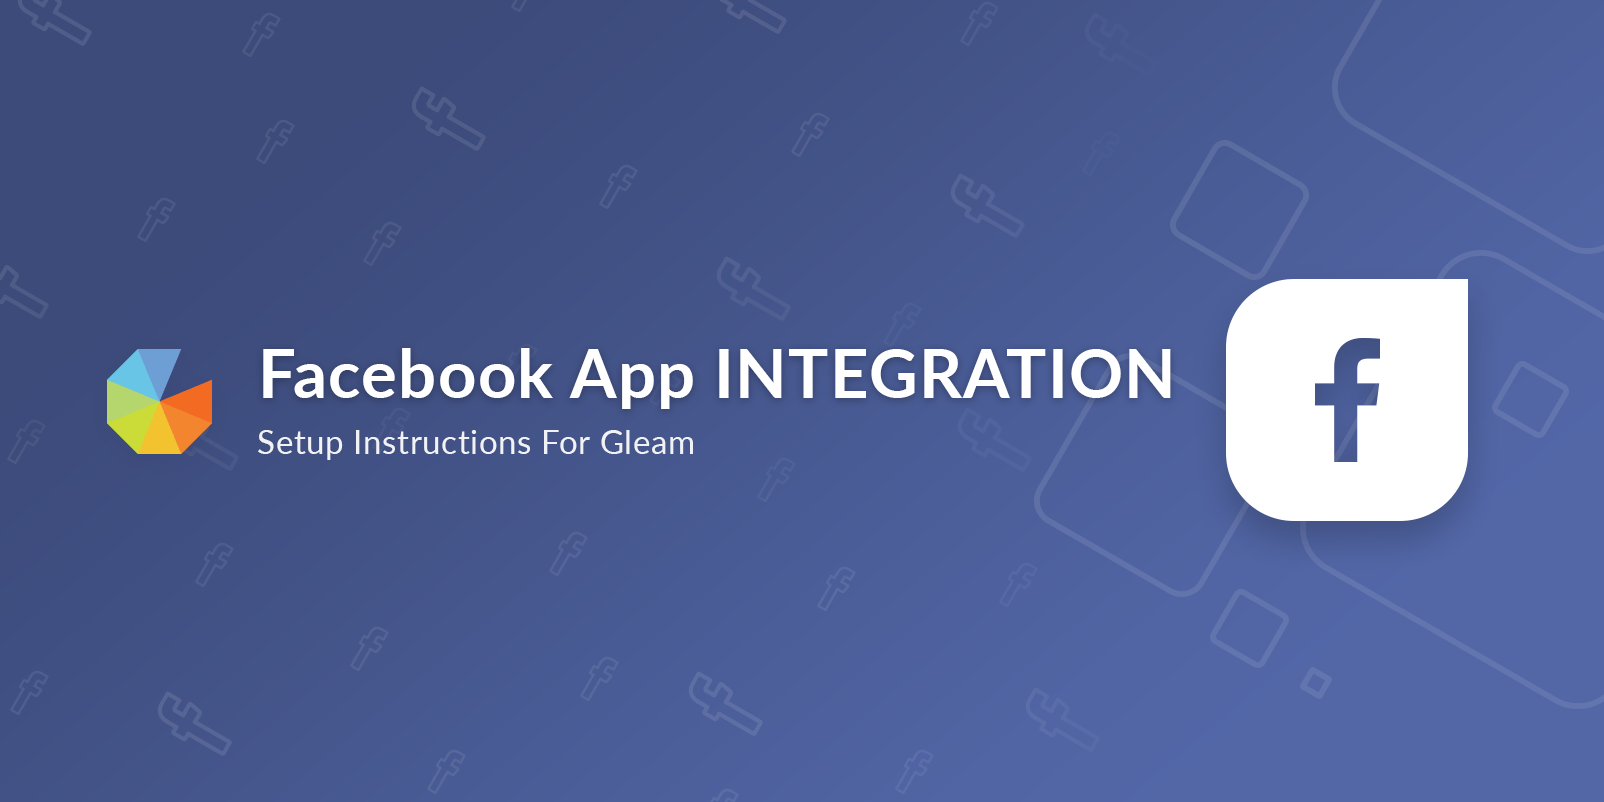 Facebook App intergration, setup instructions for Gleam